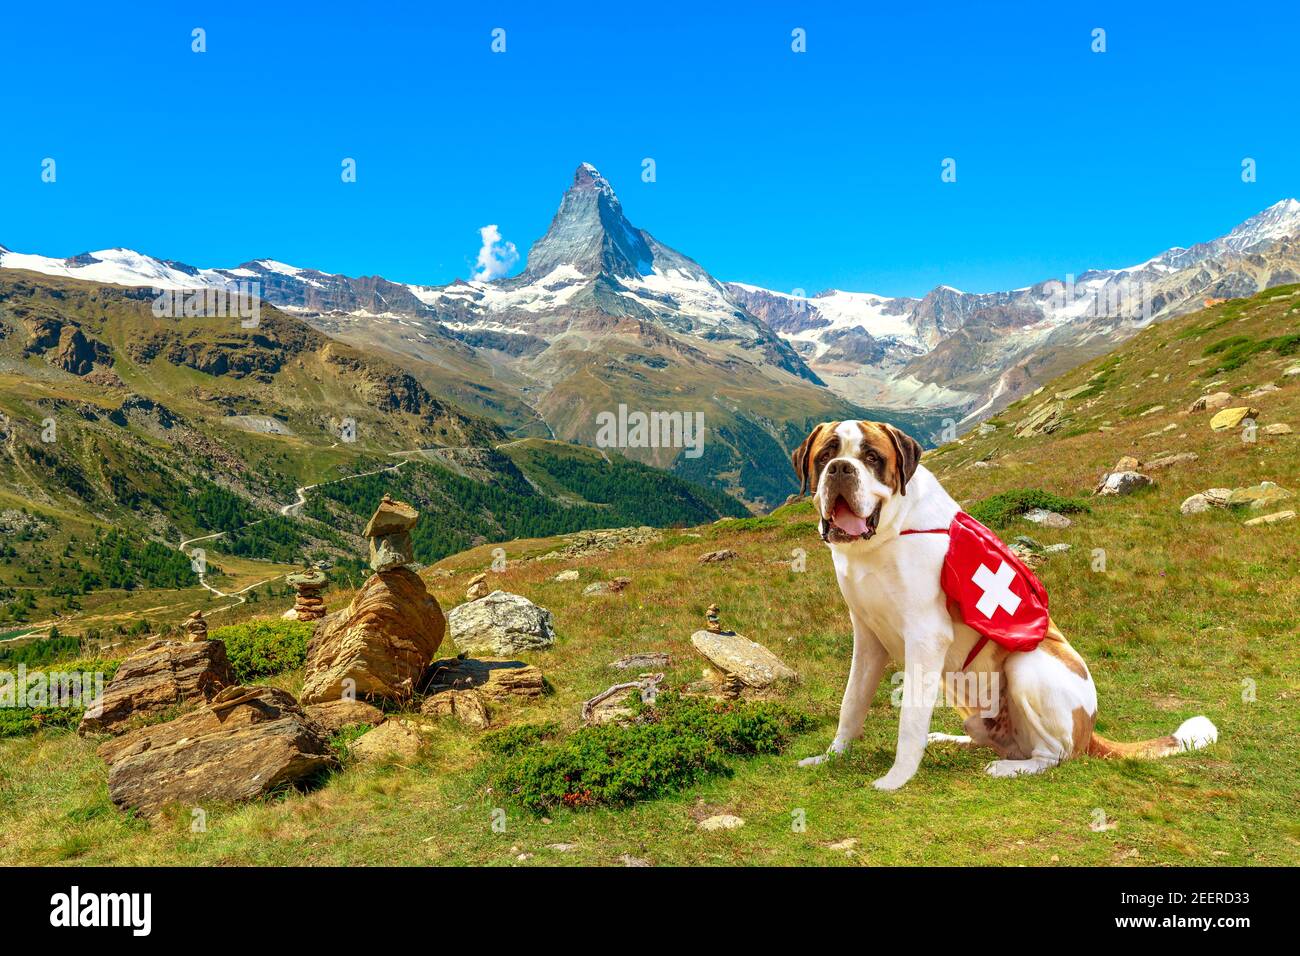 St. Bernard rescue dog standing in Zermatt, Canton of Valais, Switzerland, with Mount Matterhorn or Monte Cervino or Mont Cervin along the 5 Lakes Stock Photo